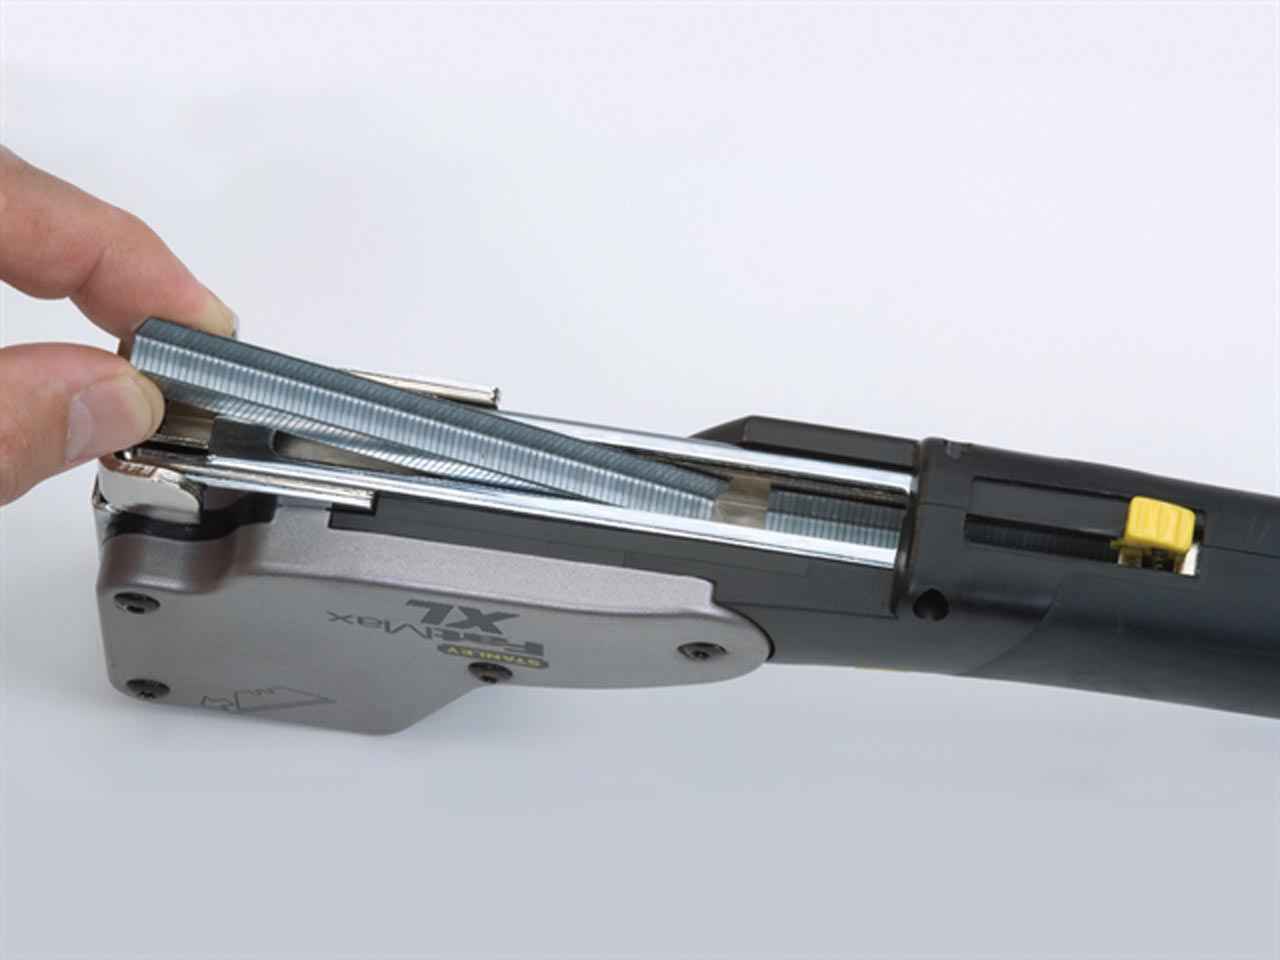 Mechanical tacker Stanley FatMax guns, staple Nailers, riveting staple - 0-PHT350 0-PHT350 tools - guns - Manual